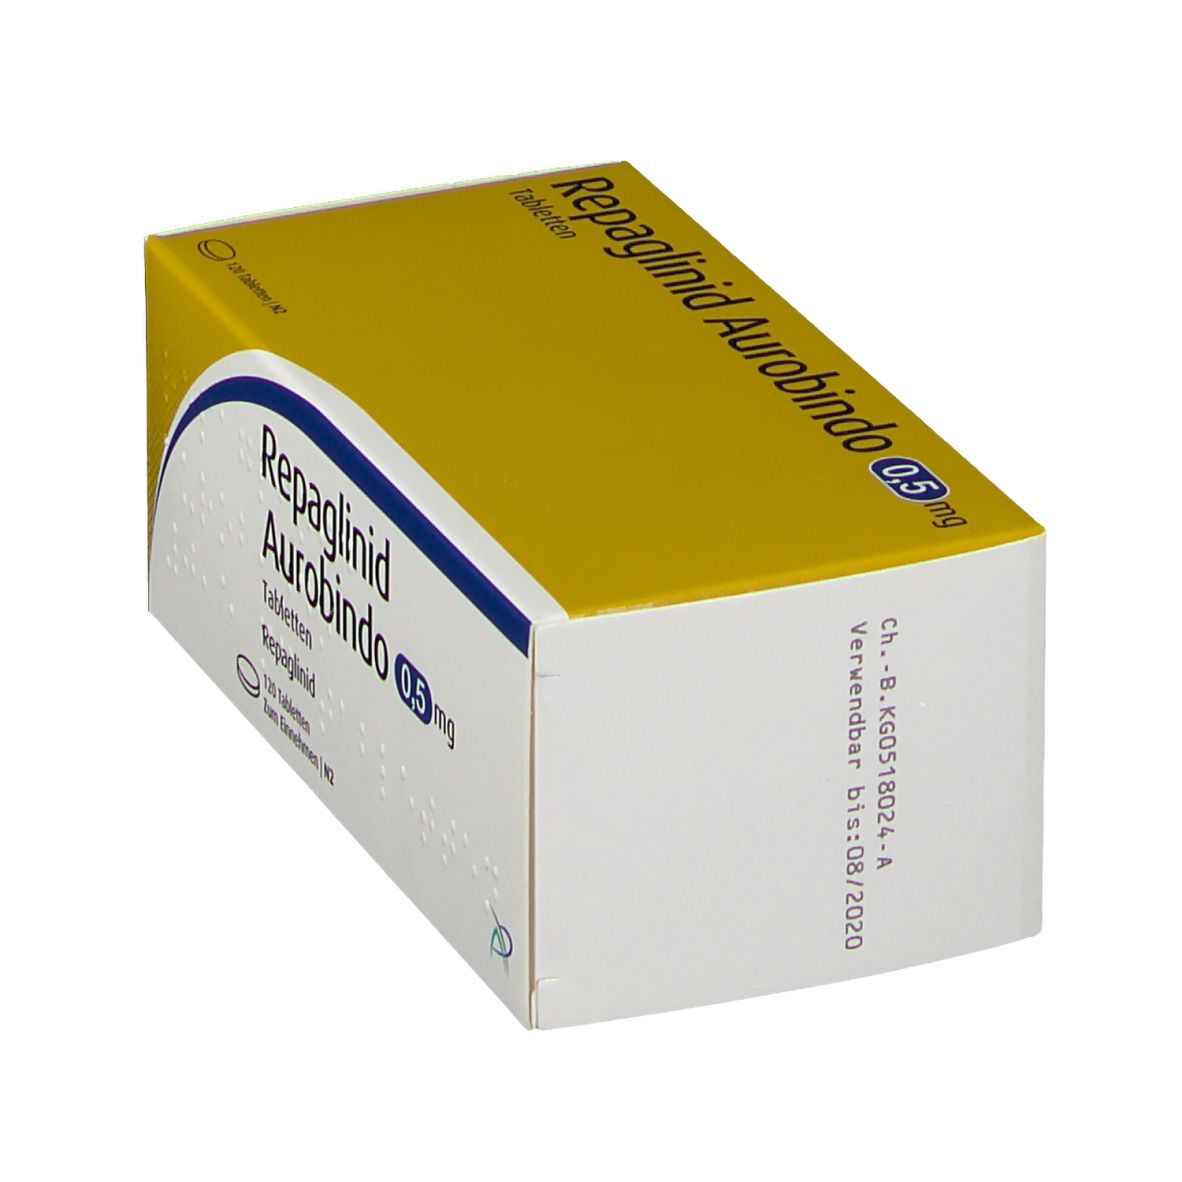 REPAGLINID Aurobindo 0,5 mg Tabletten